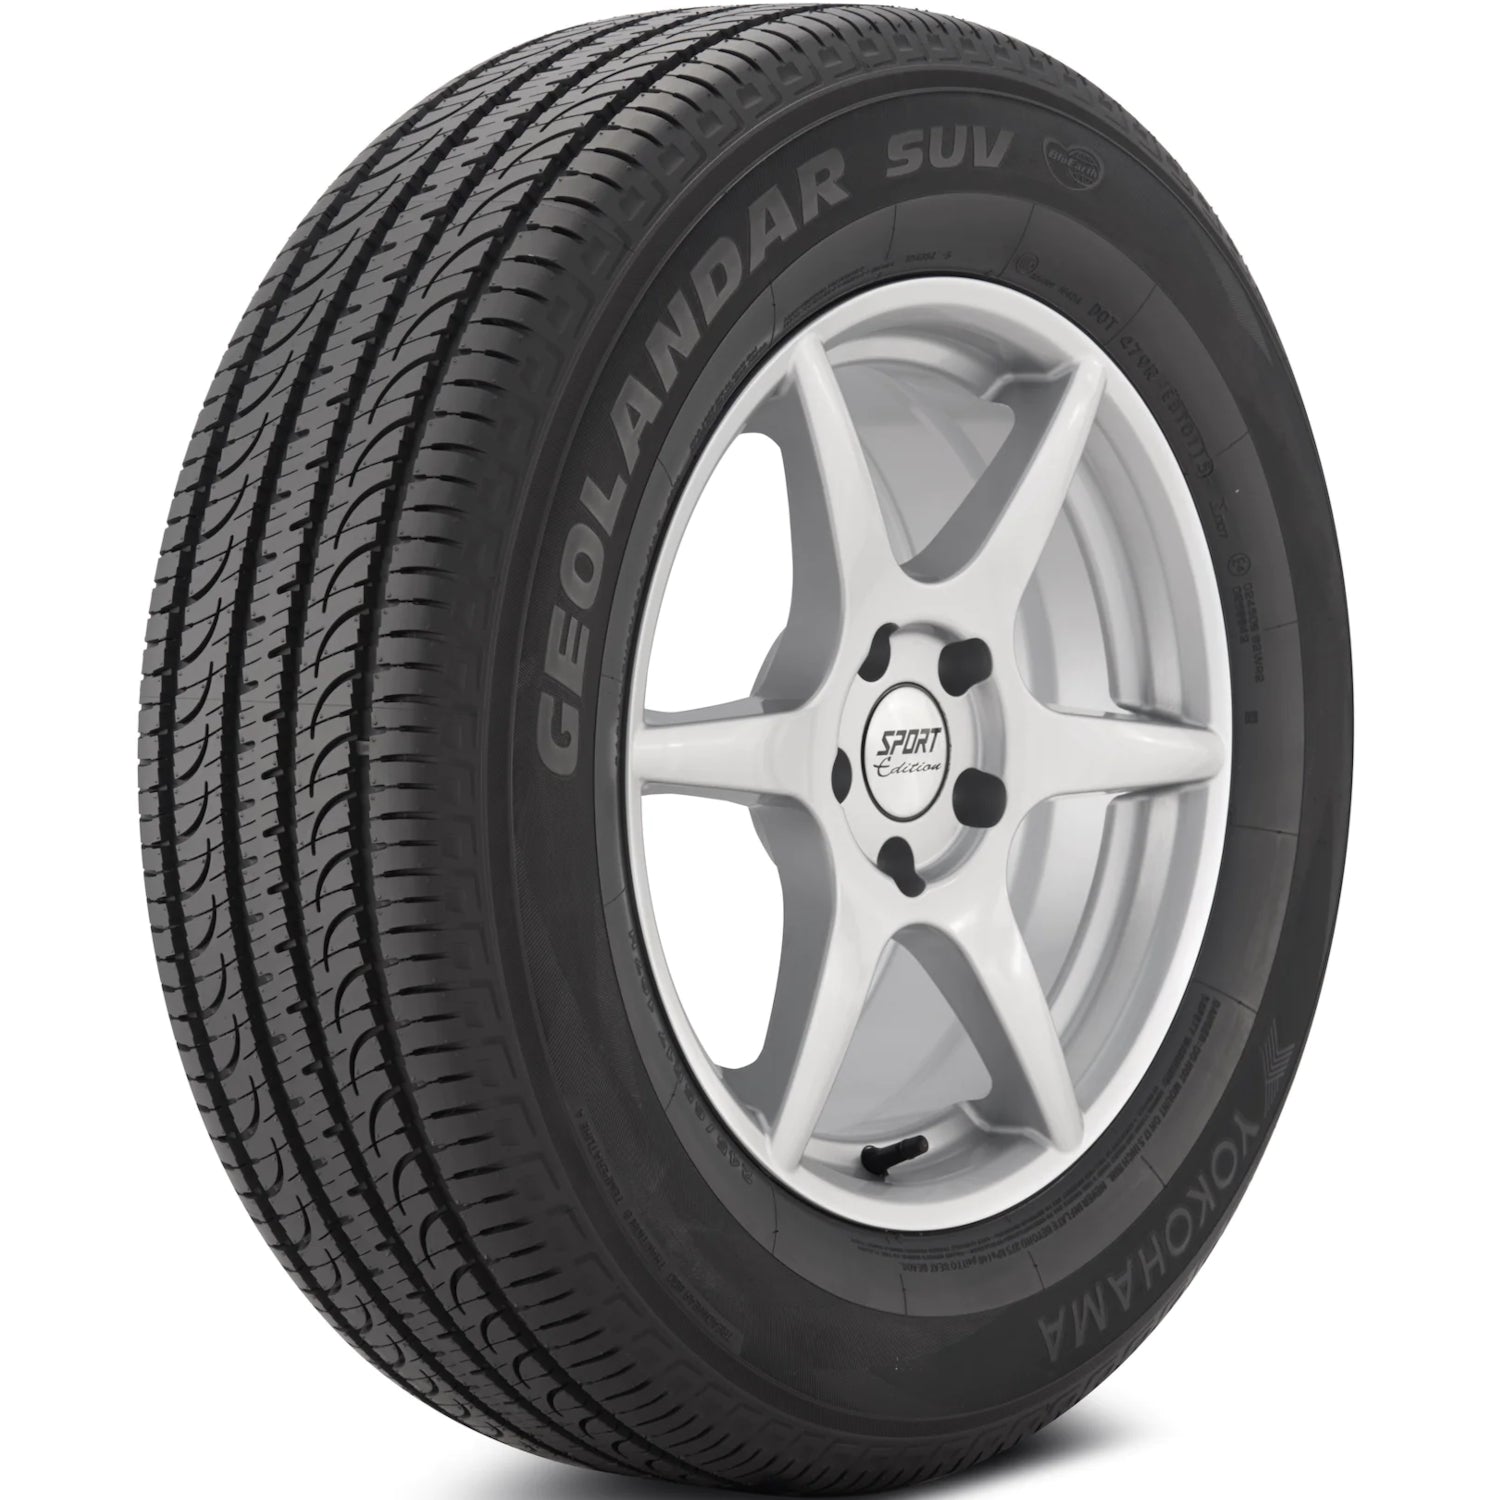 YOKOHAMA GEOLANDAR G055 235/65R18 (30X9.4R 18) Tires